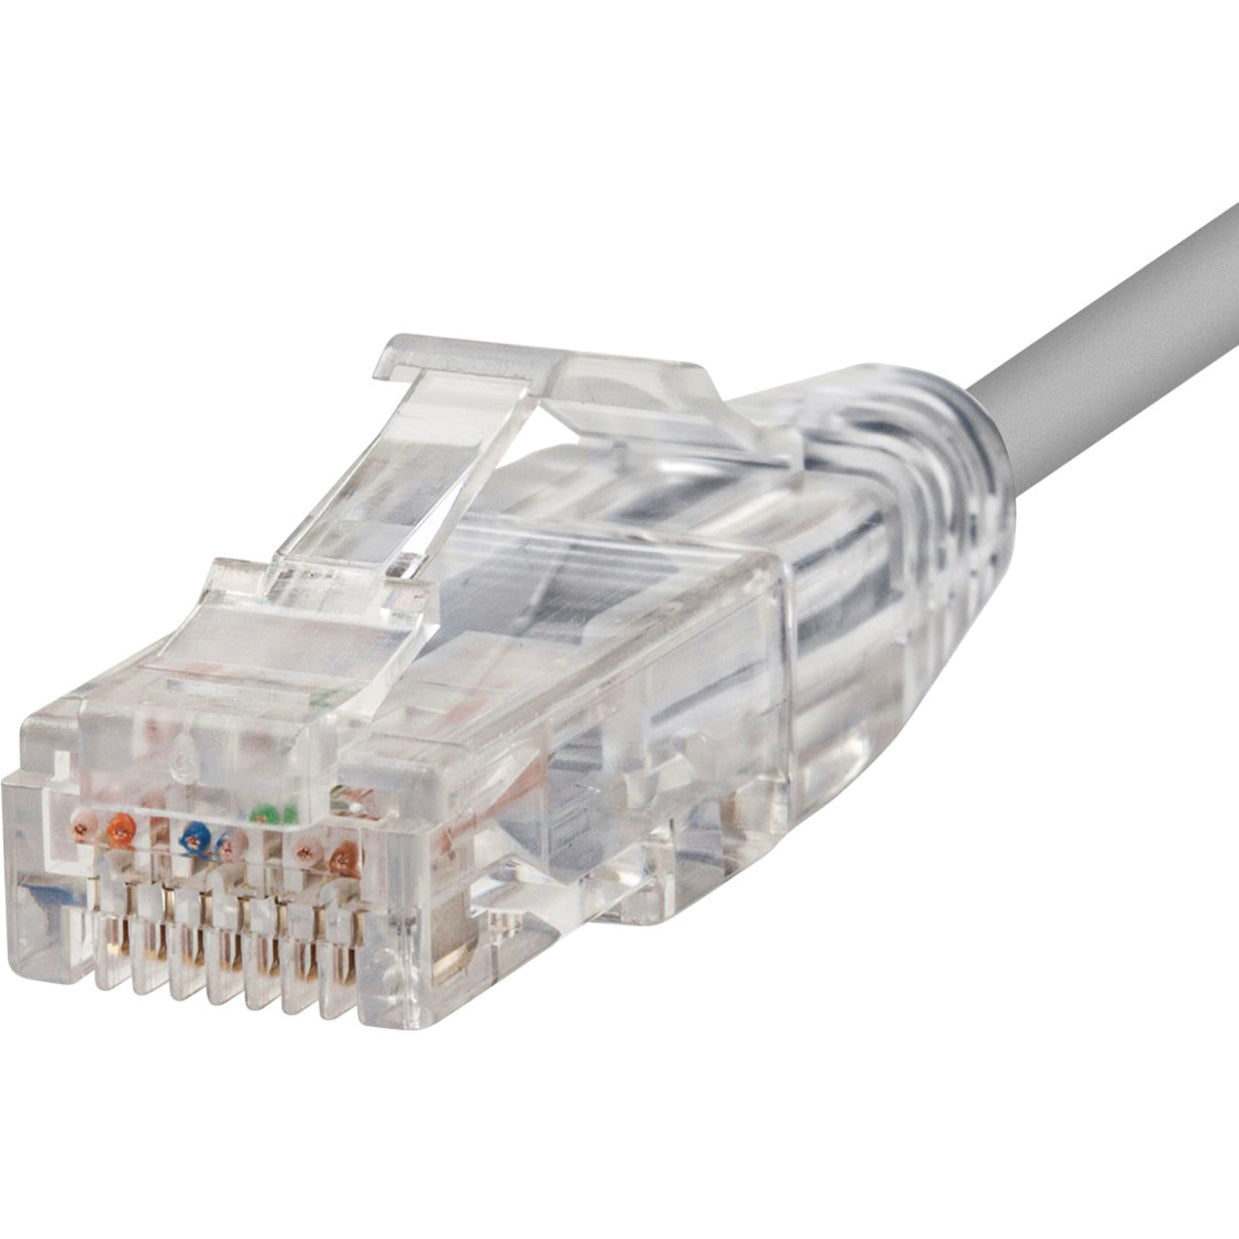 Monoprice 13544 SlimRun Cat6 28AWG UTP Ethernet Network Cable, 10ft Gray, Flexible, Snagless